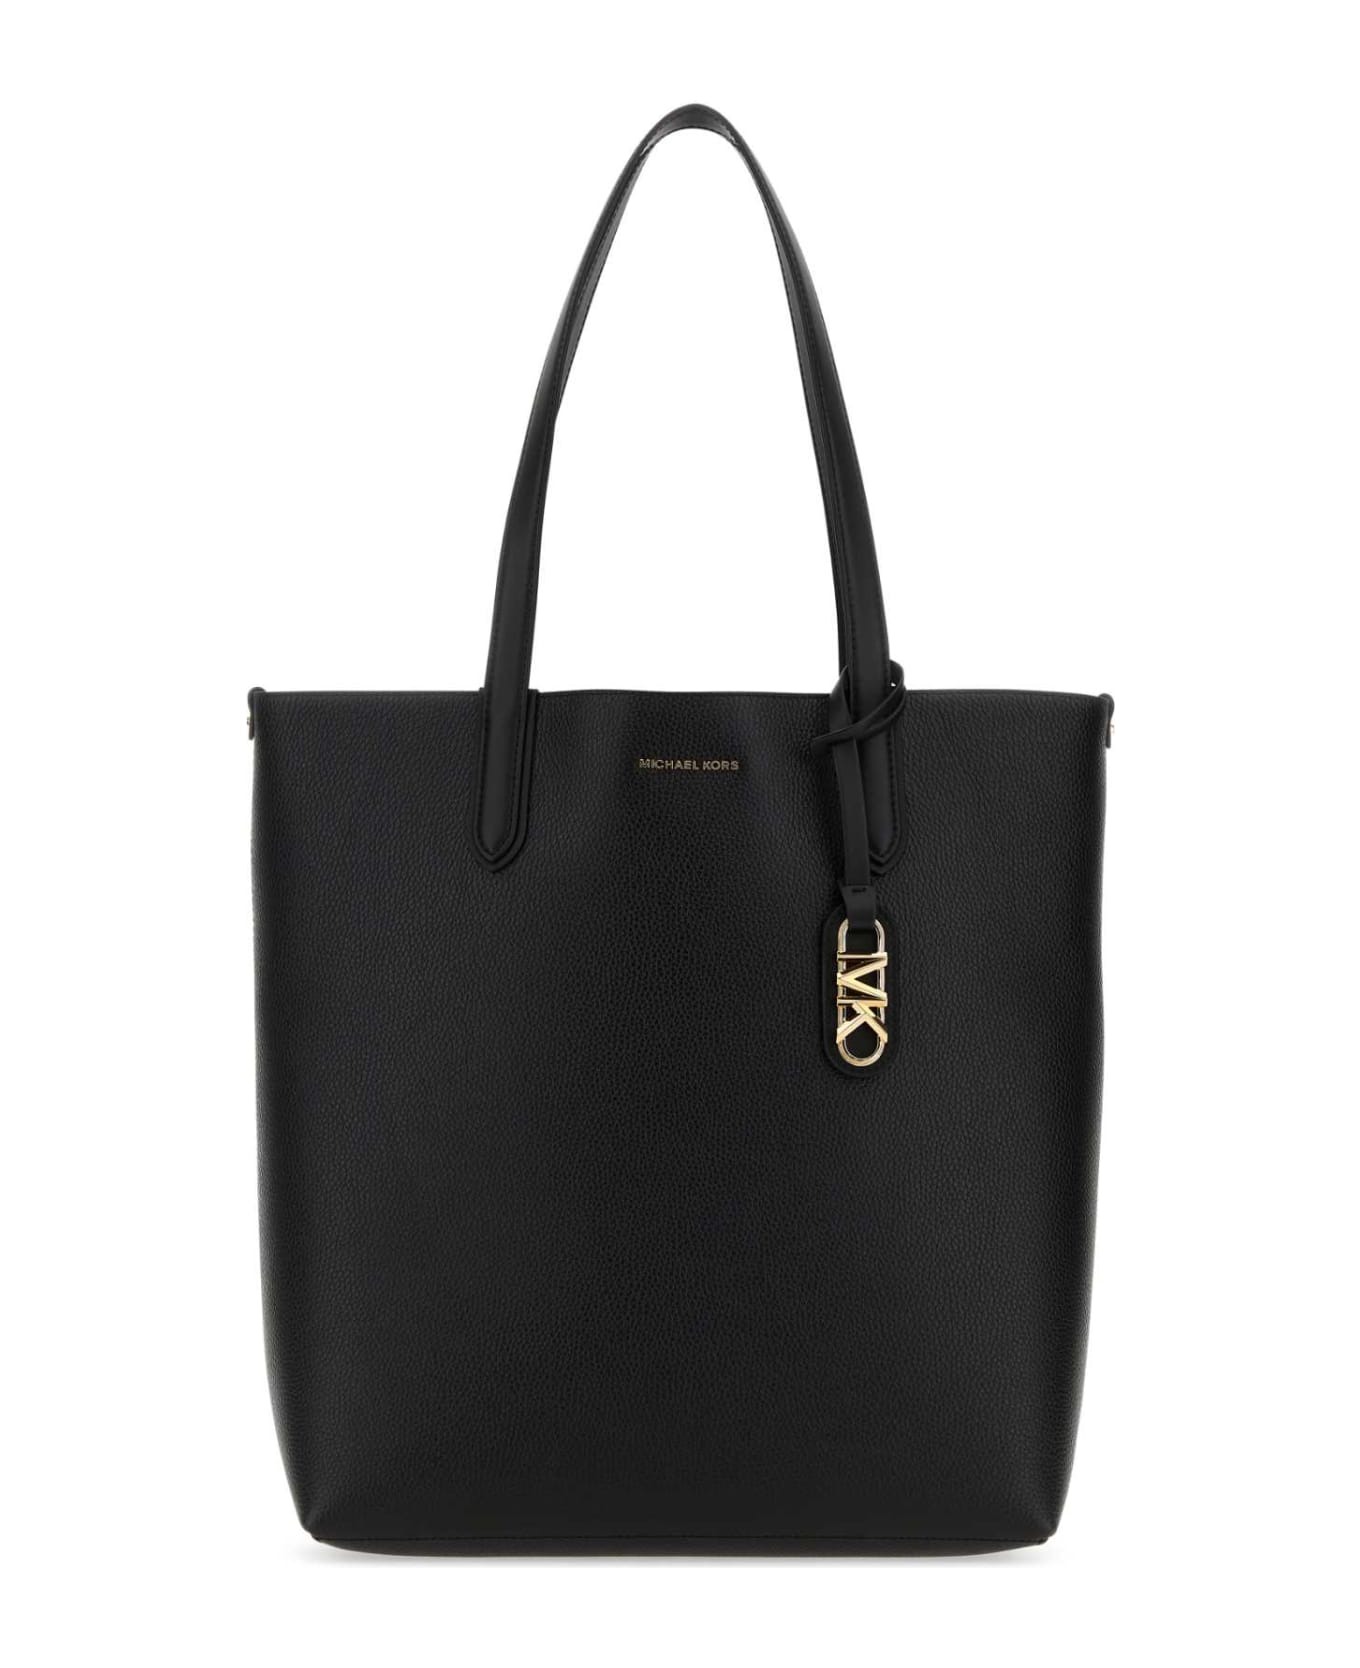 Michael Kors Black Leather Large Eliza Shopping Bag - Black